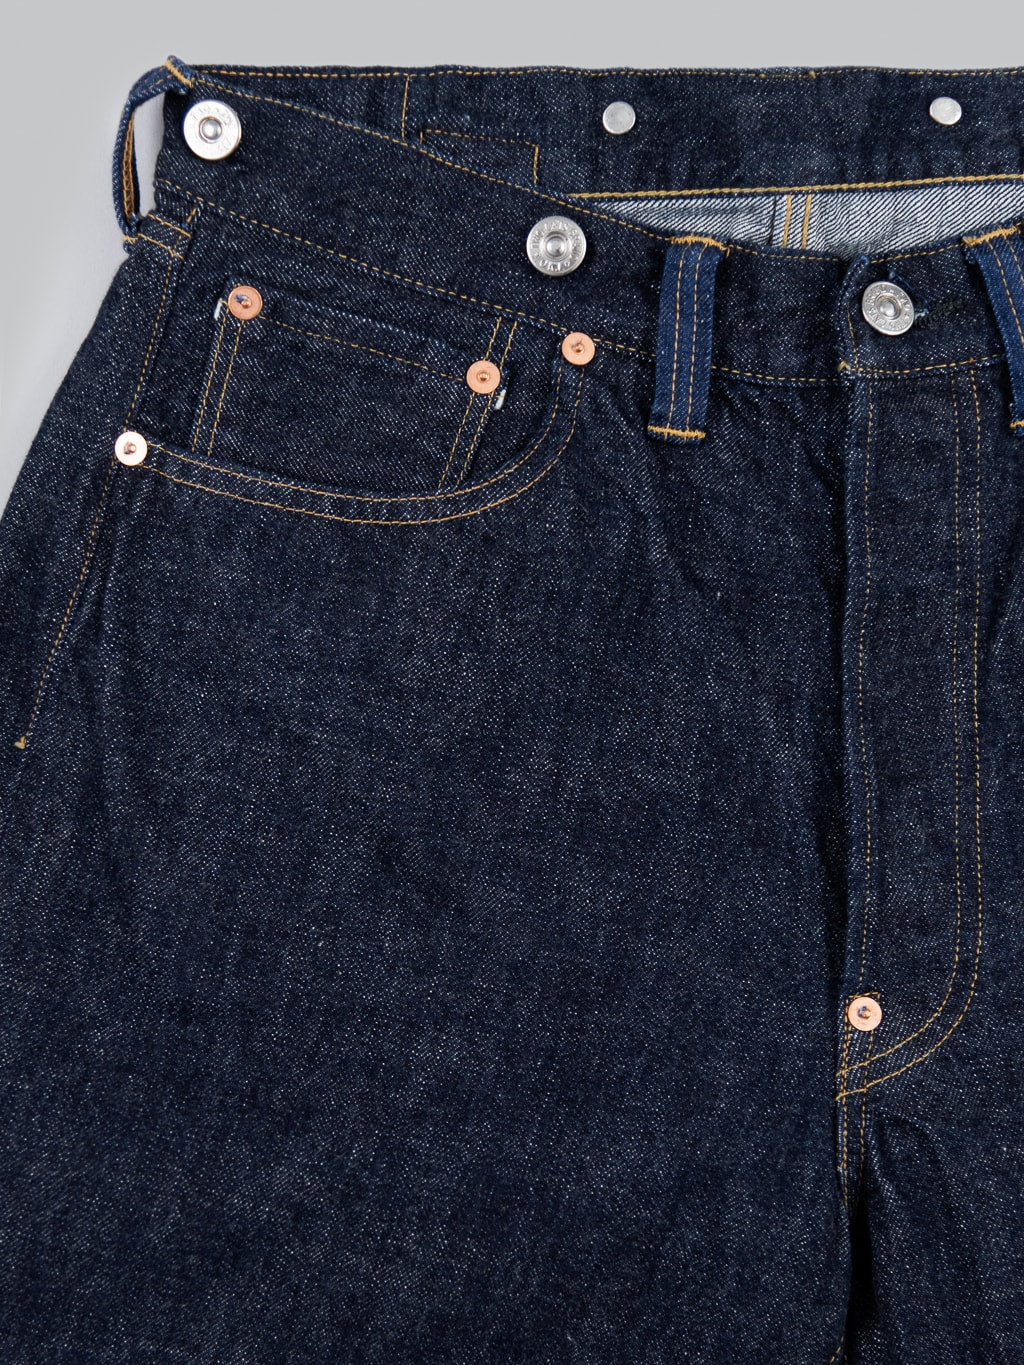 TCB 20s indigo Jeans one wash vintage style front pocket